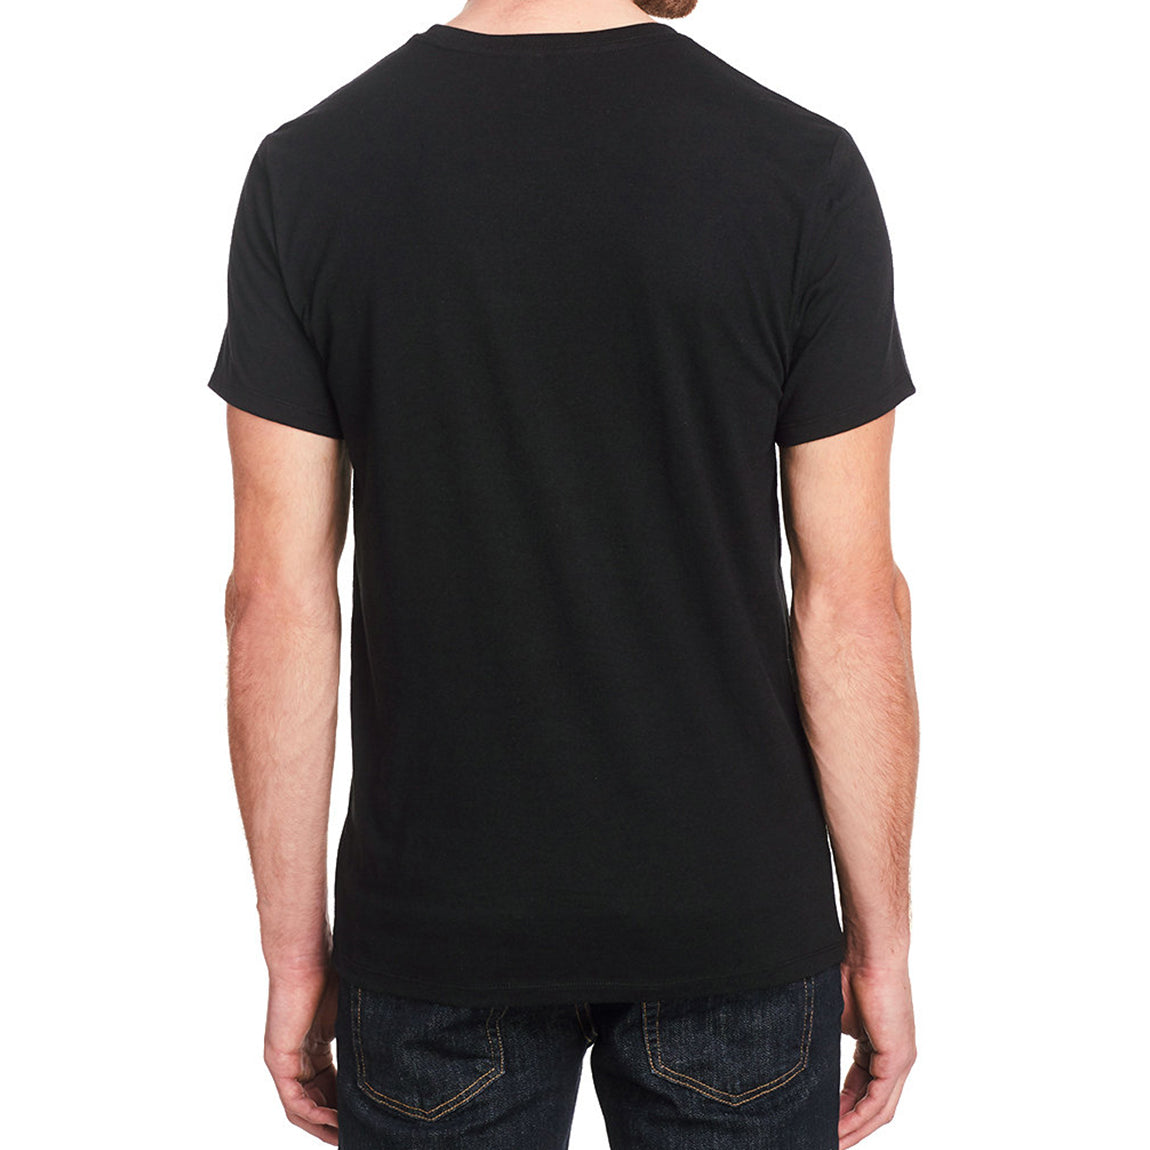 Threadfast Apparel Unisex Triblend Short-Sleeve T-Shirt